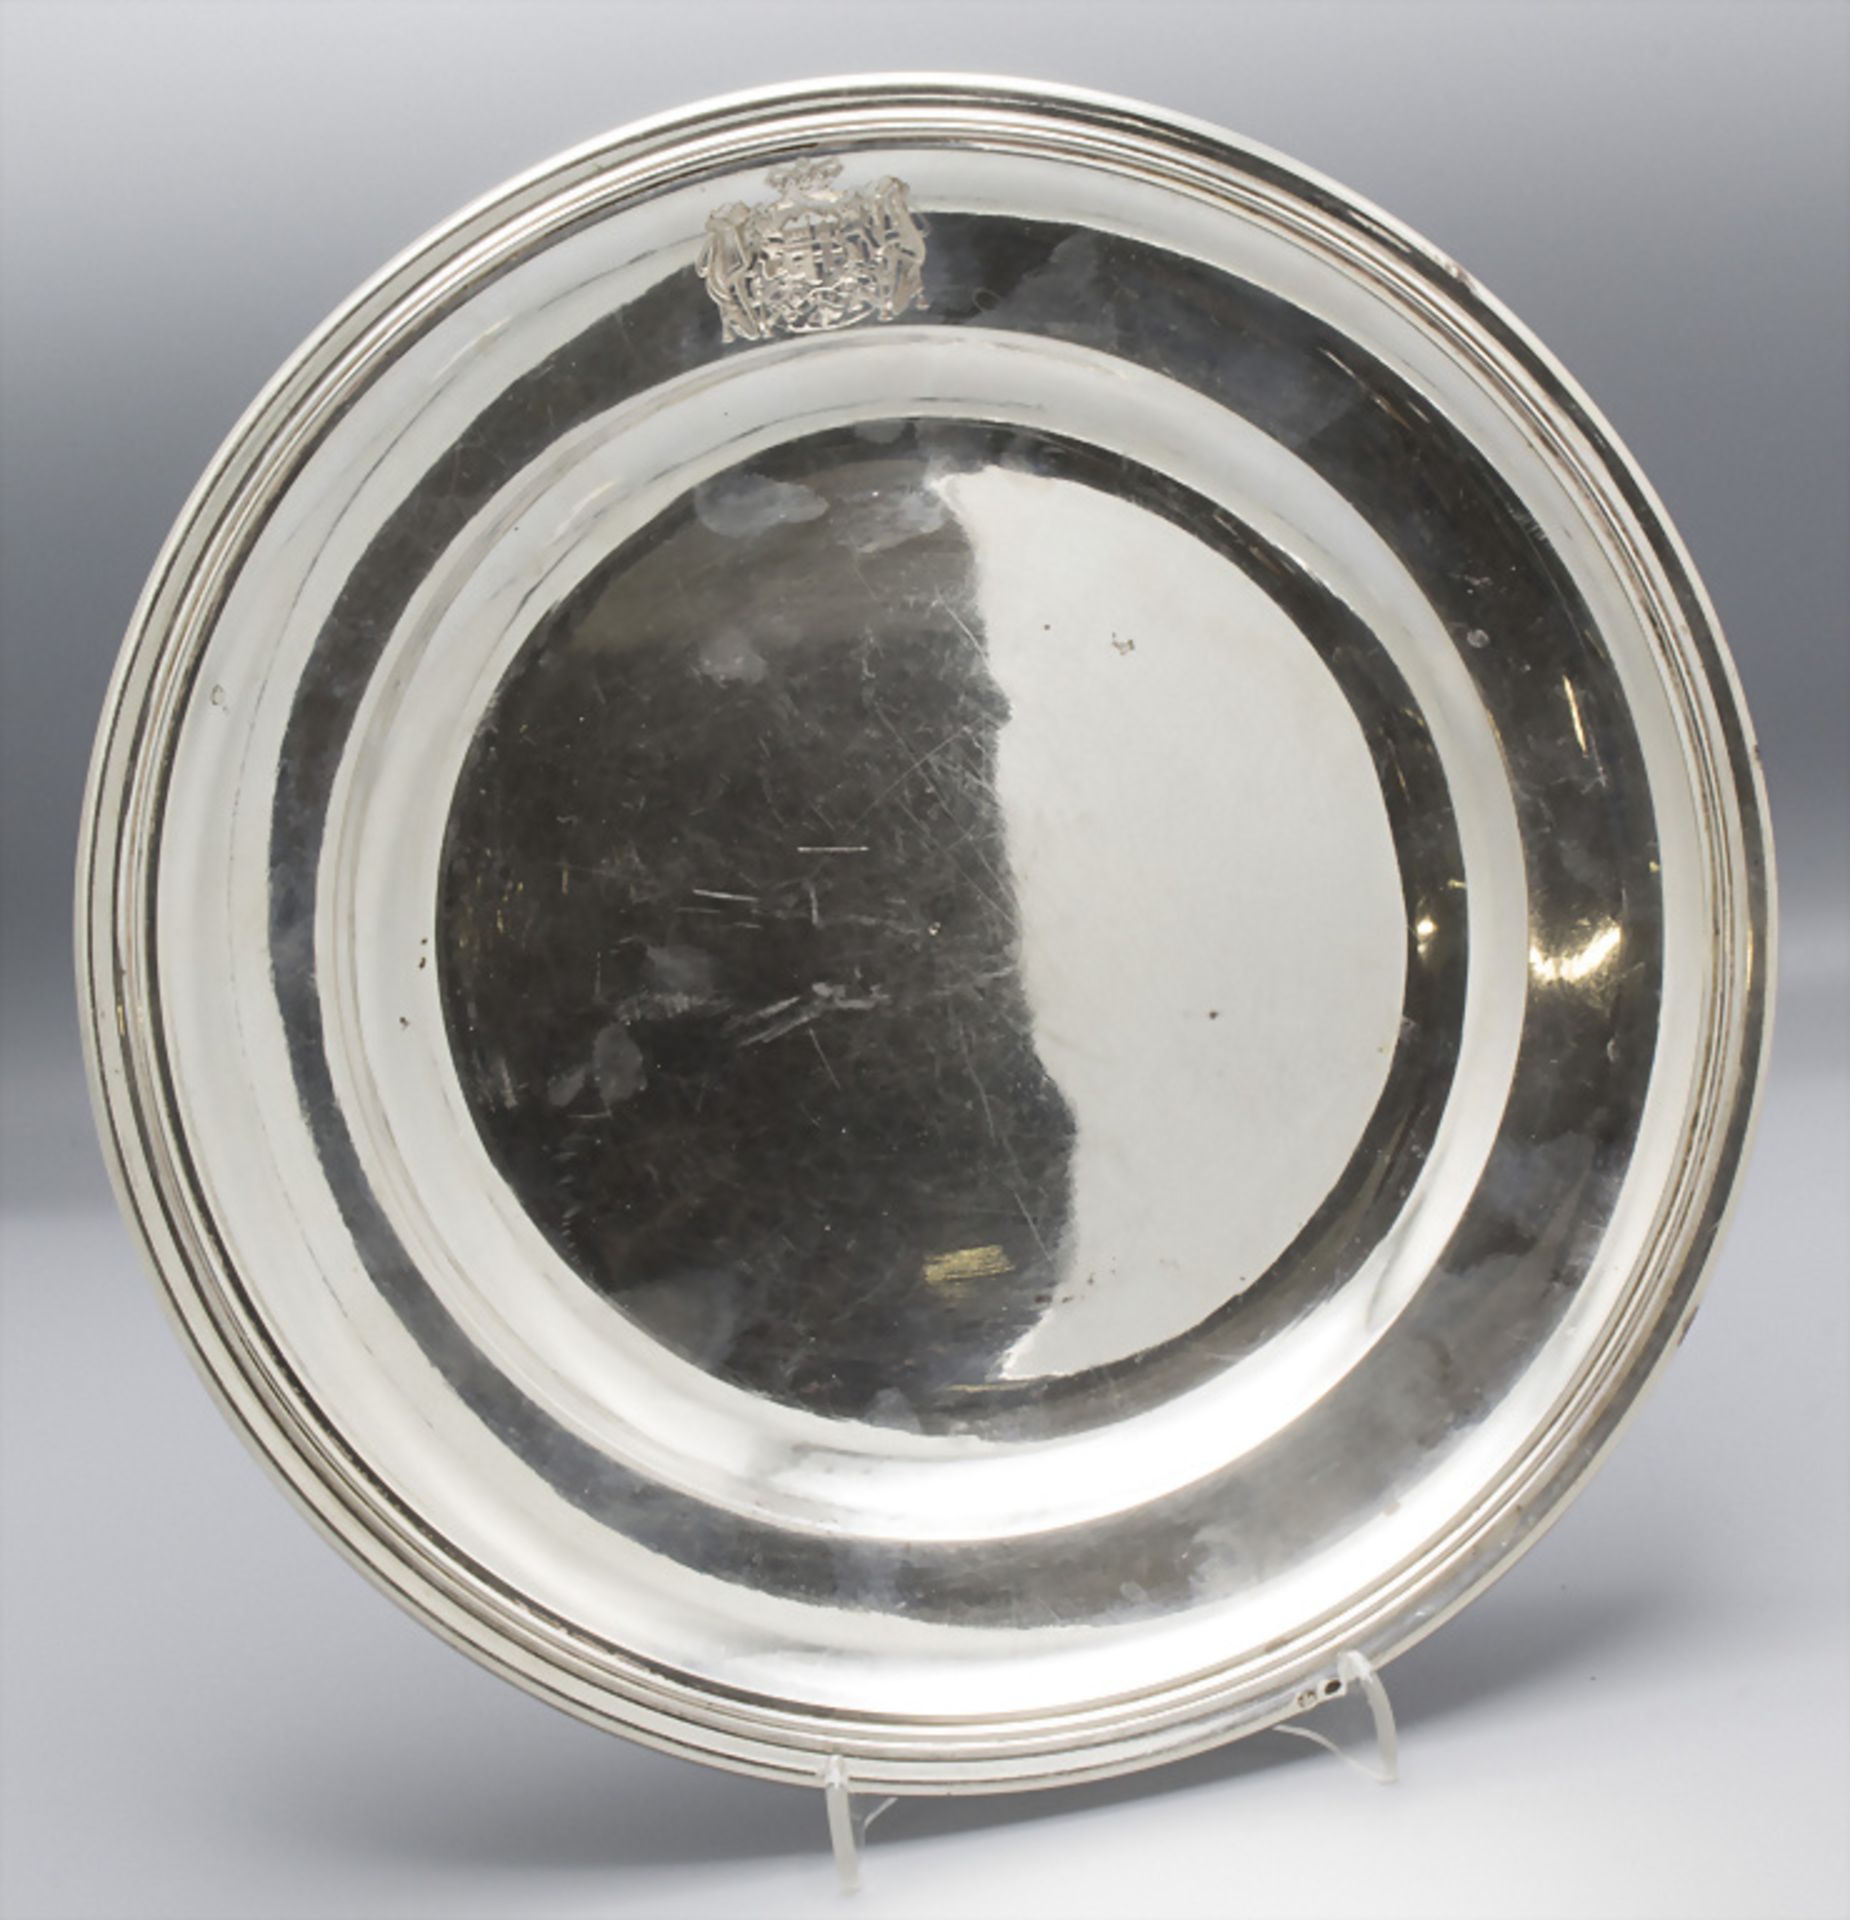 12 Silberteller / 12 assiettes en argent massif / A set of 12 silver plates, Odiot, Paris, um 1870 - Image 18 of 29